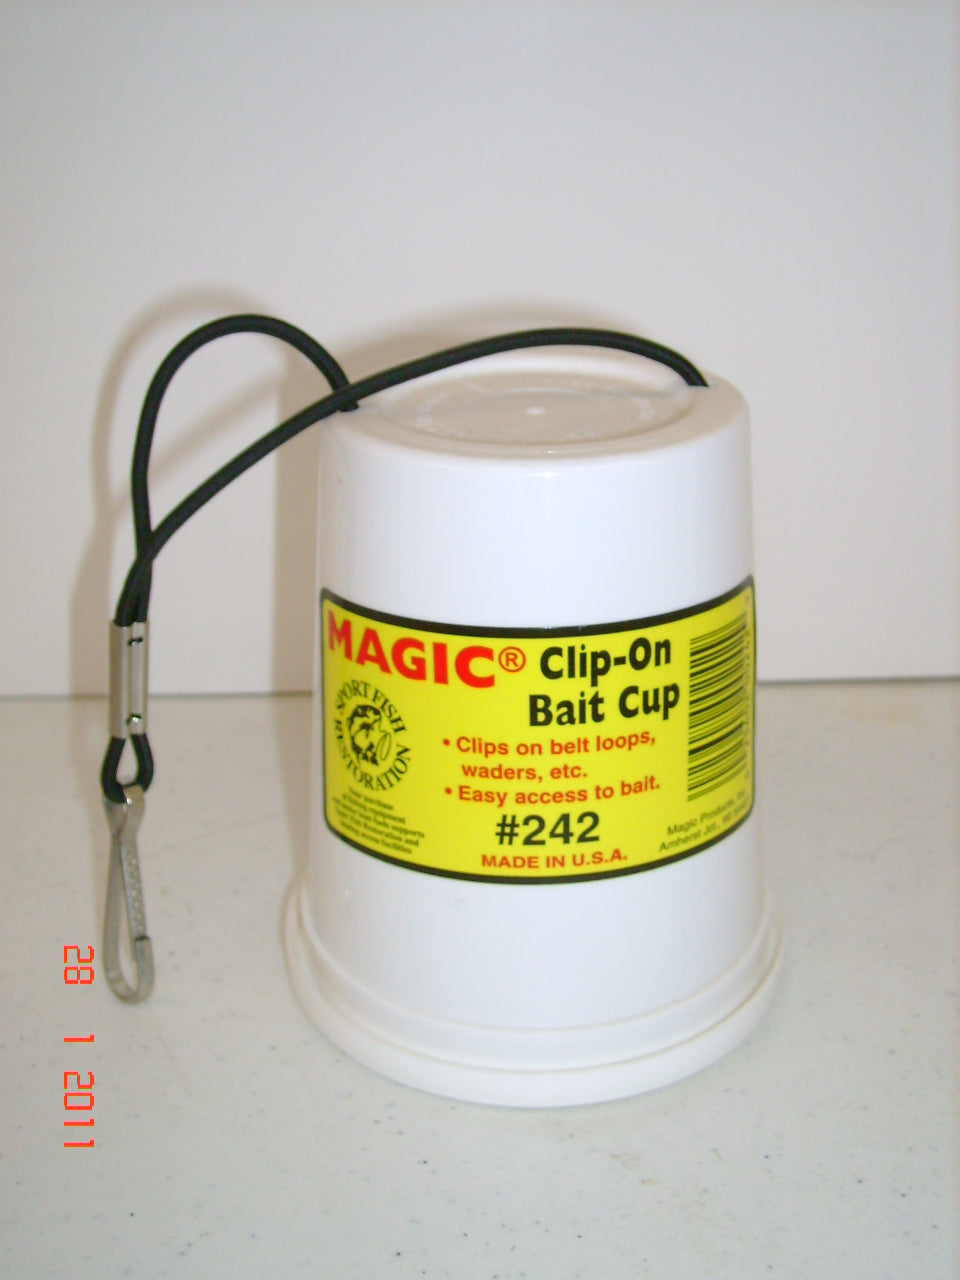 Magic Clip-on Bait Cup